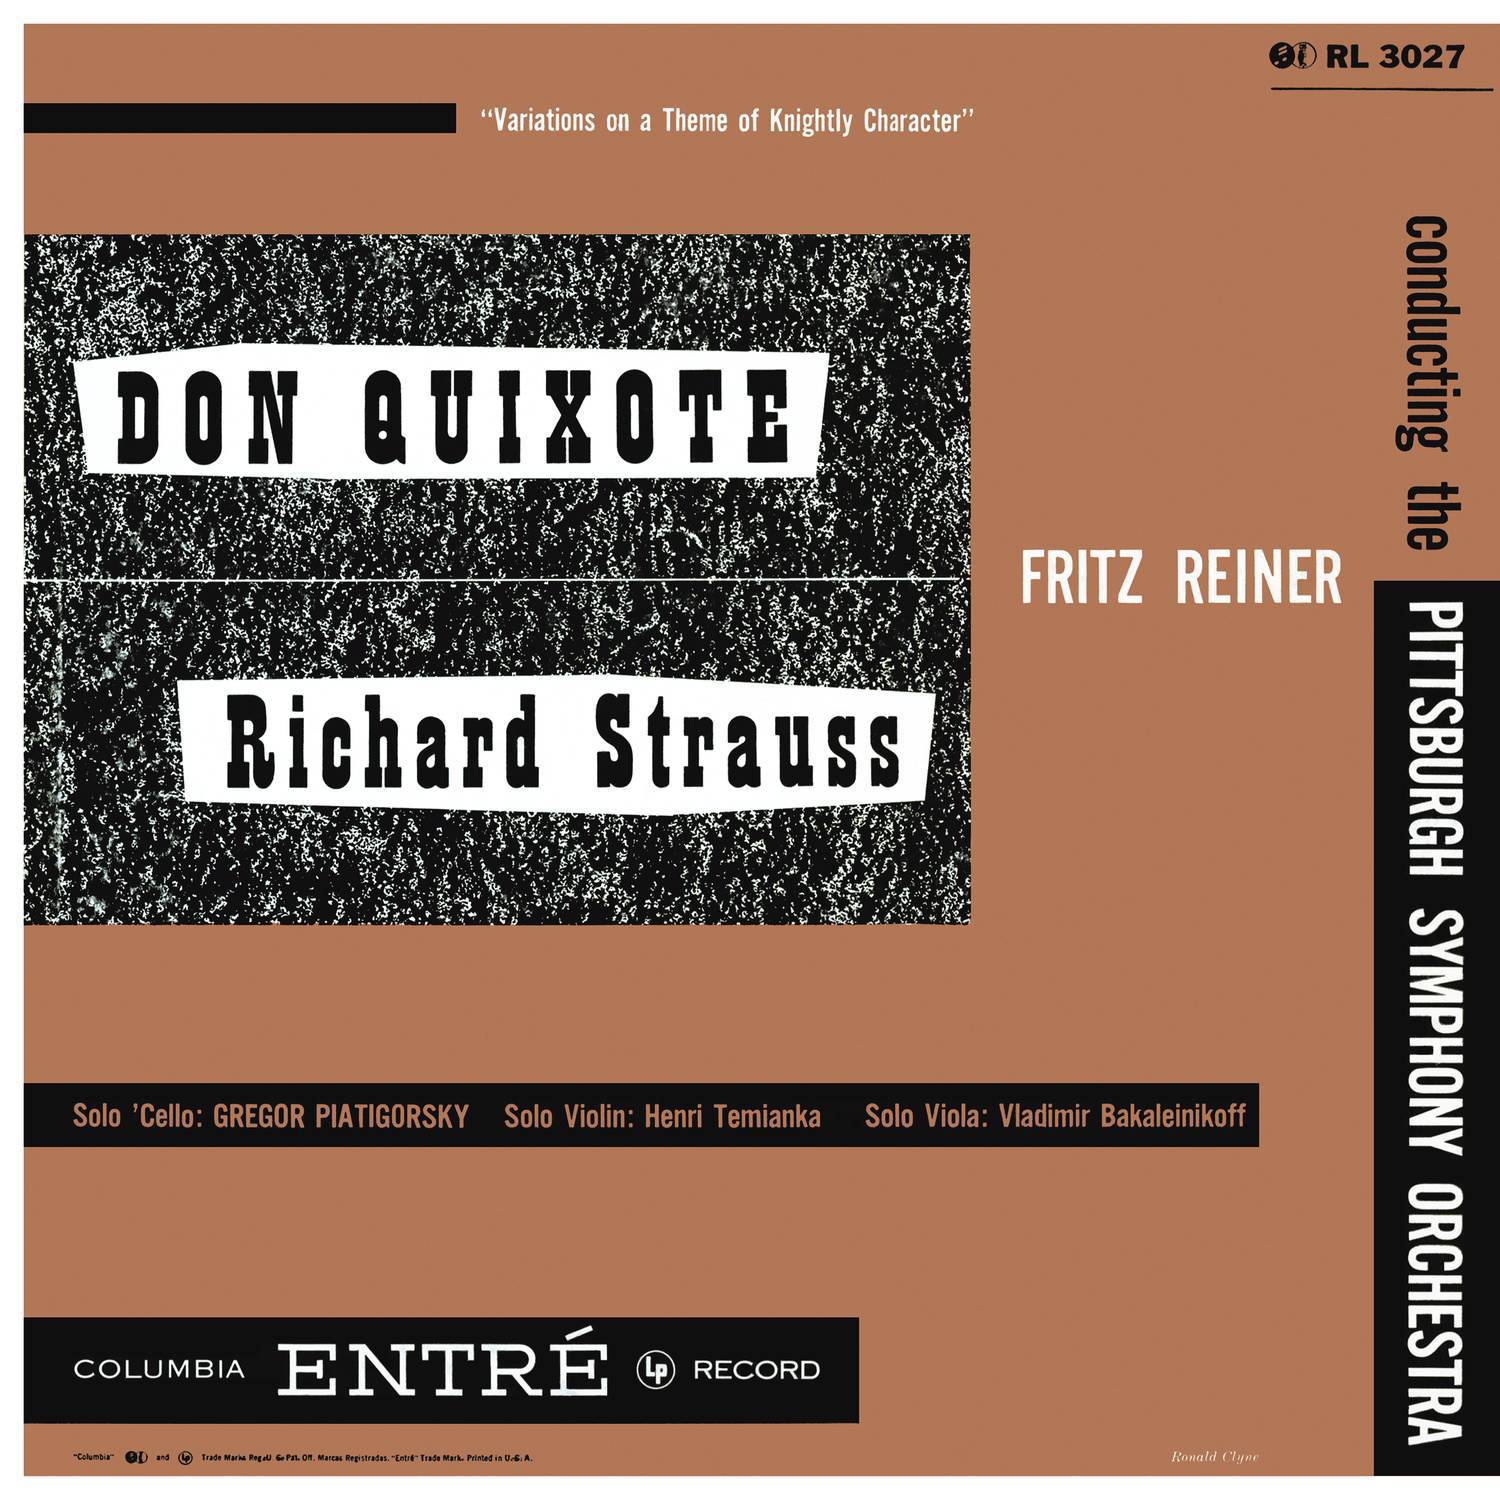 Strauss: Don Quixote, Op. 35  SaintSa ns: Cello Concerto No. 1 in A Minor, Op. 33 Remastered